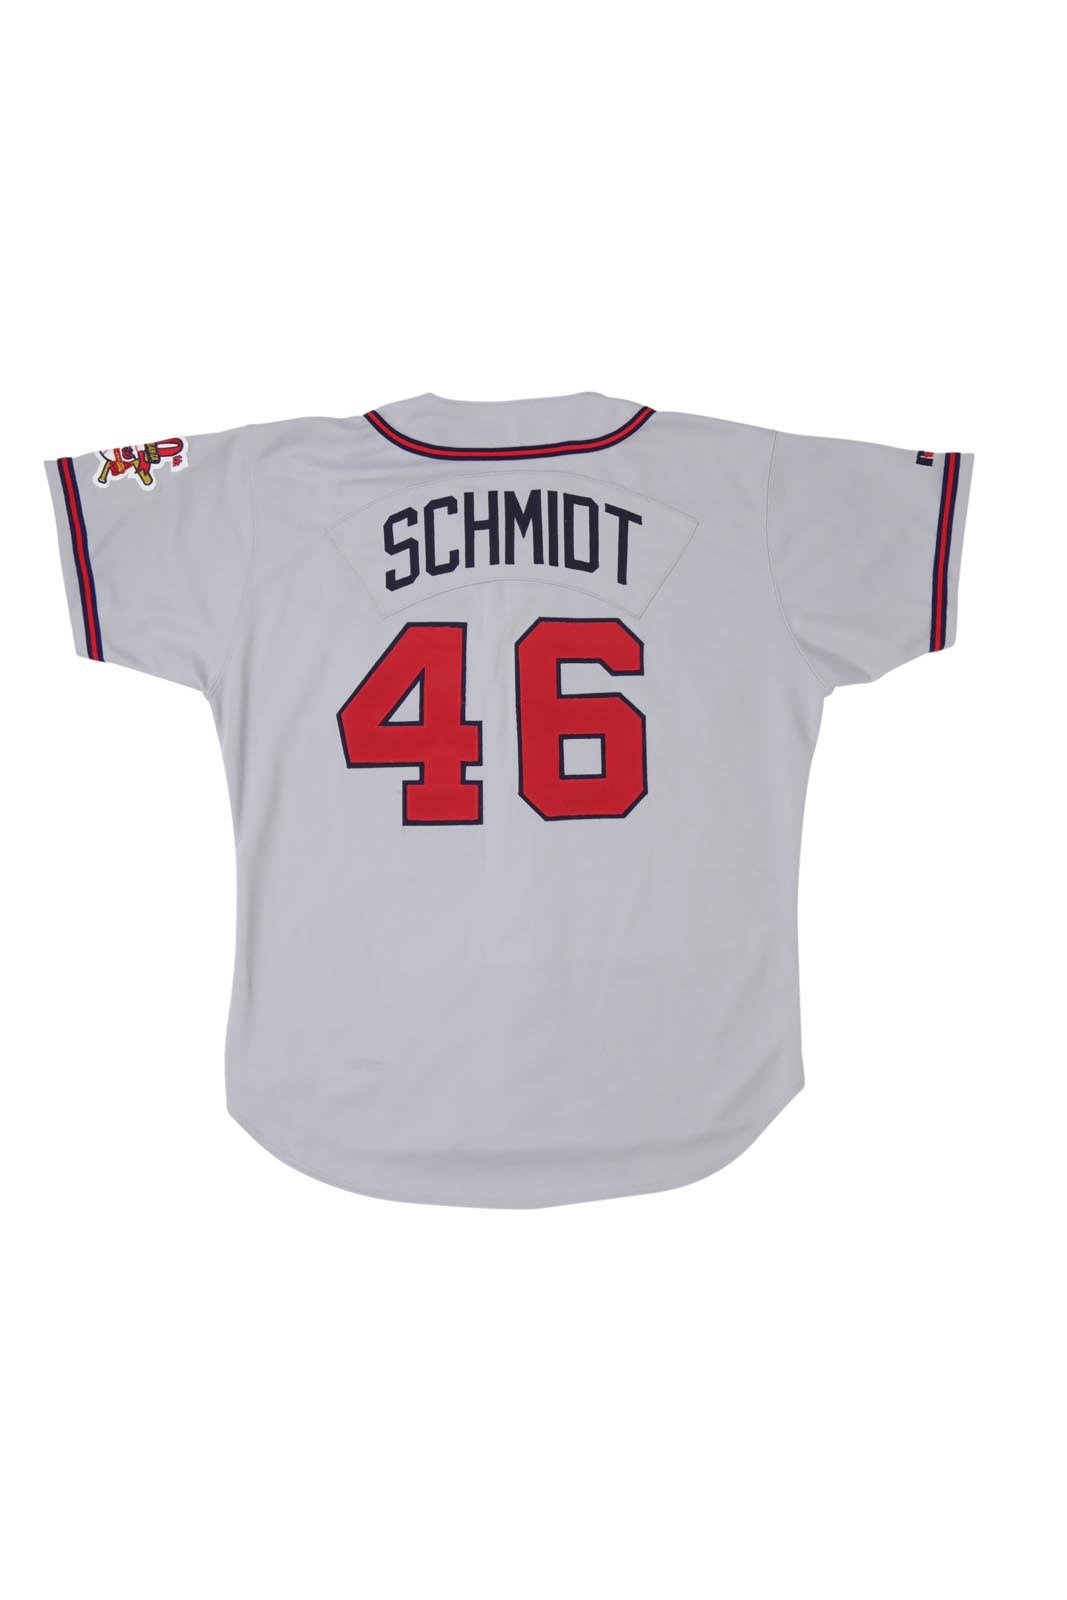 - 1995 Jason Schmidt Atlanta Braves Game Worn Rookie Jersey - Purchased from Atlanta Braves